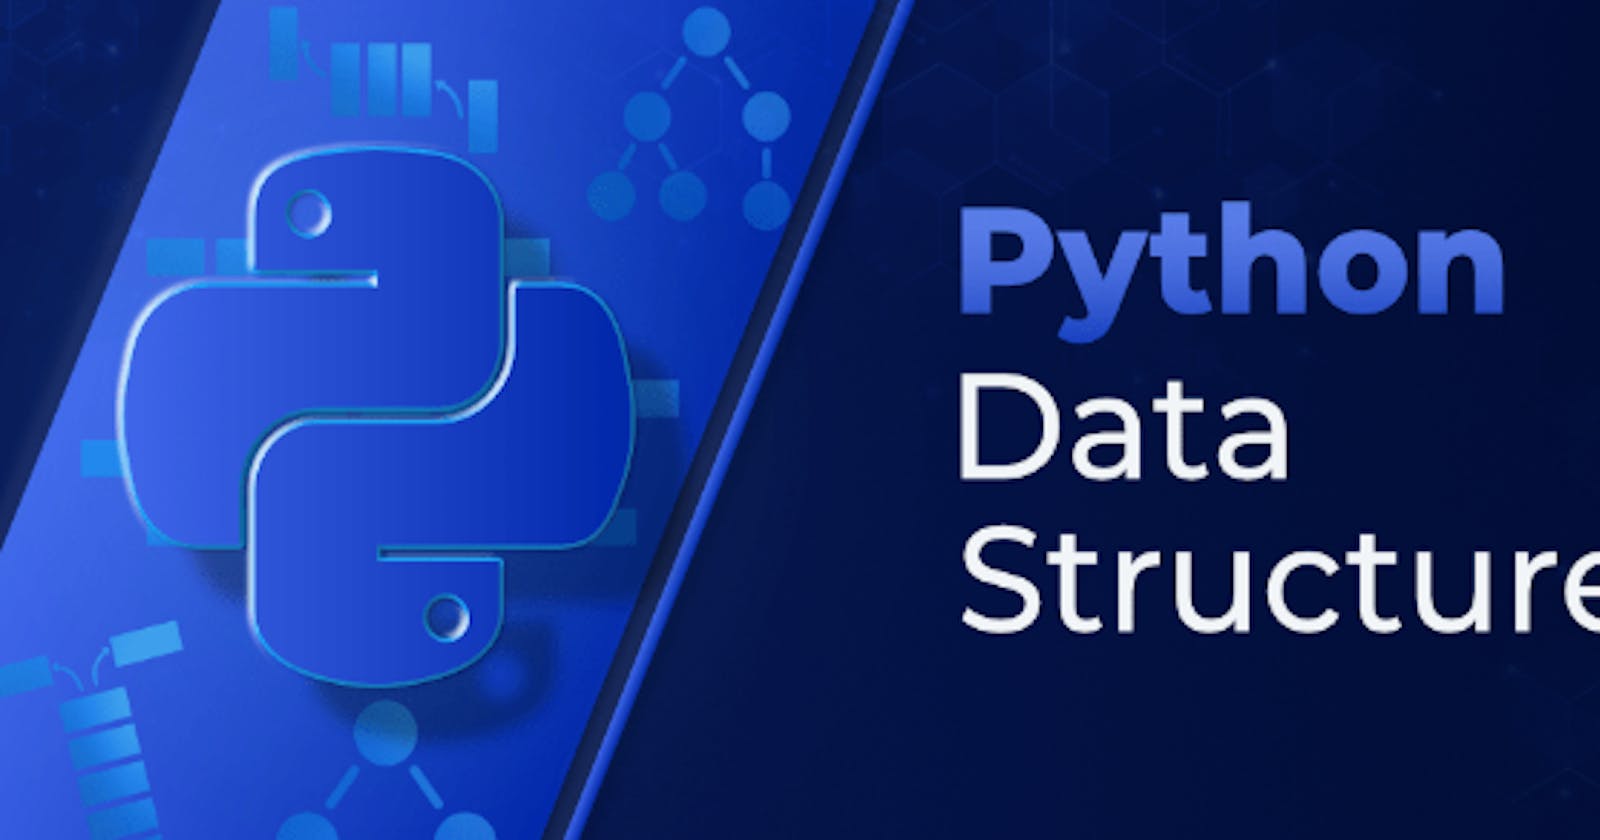 Data structures in Python